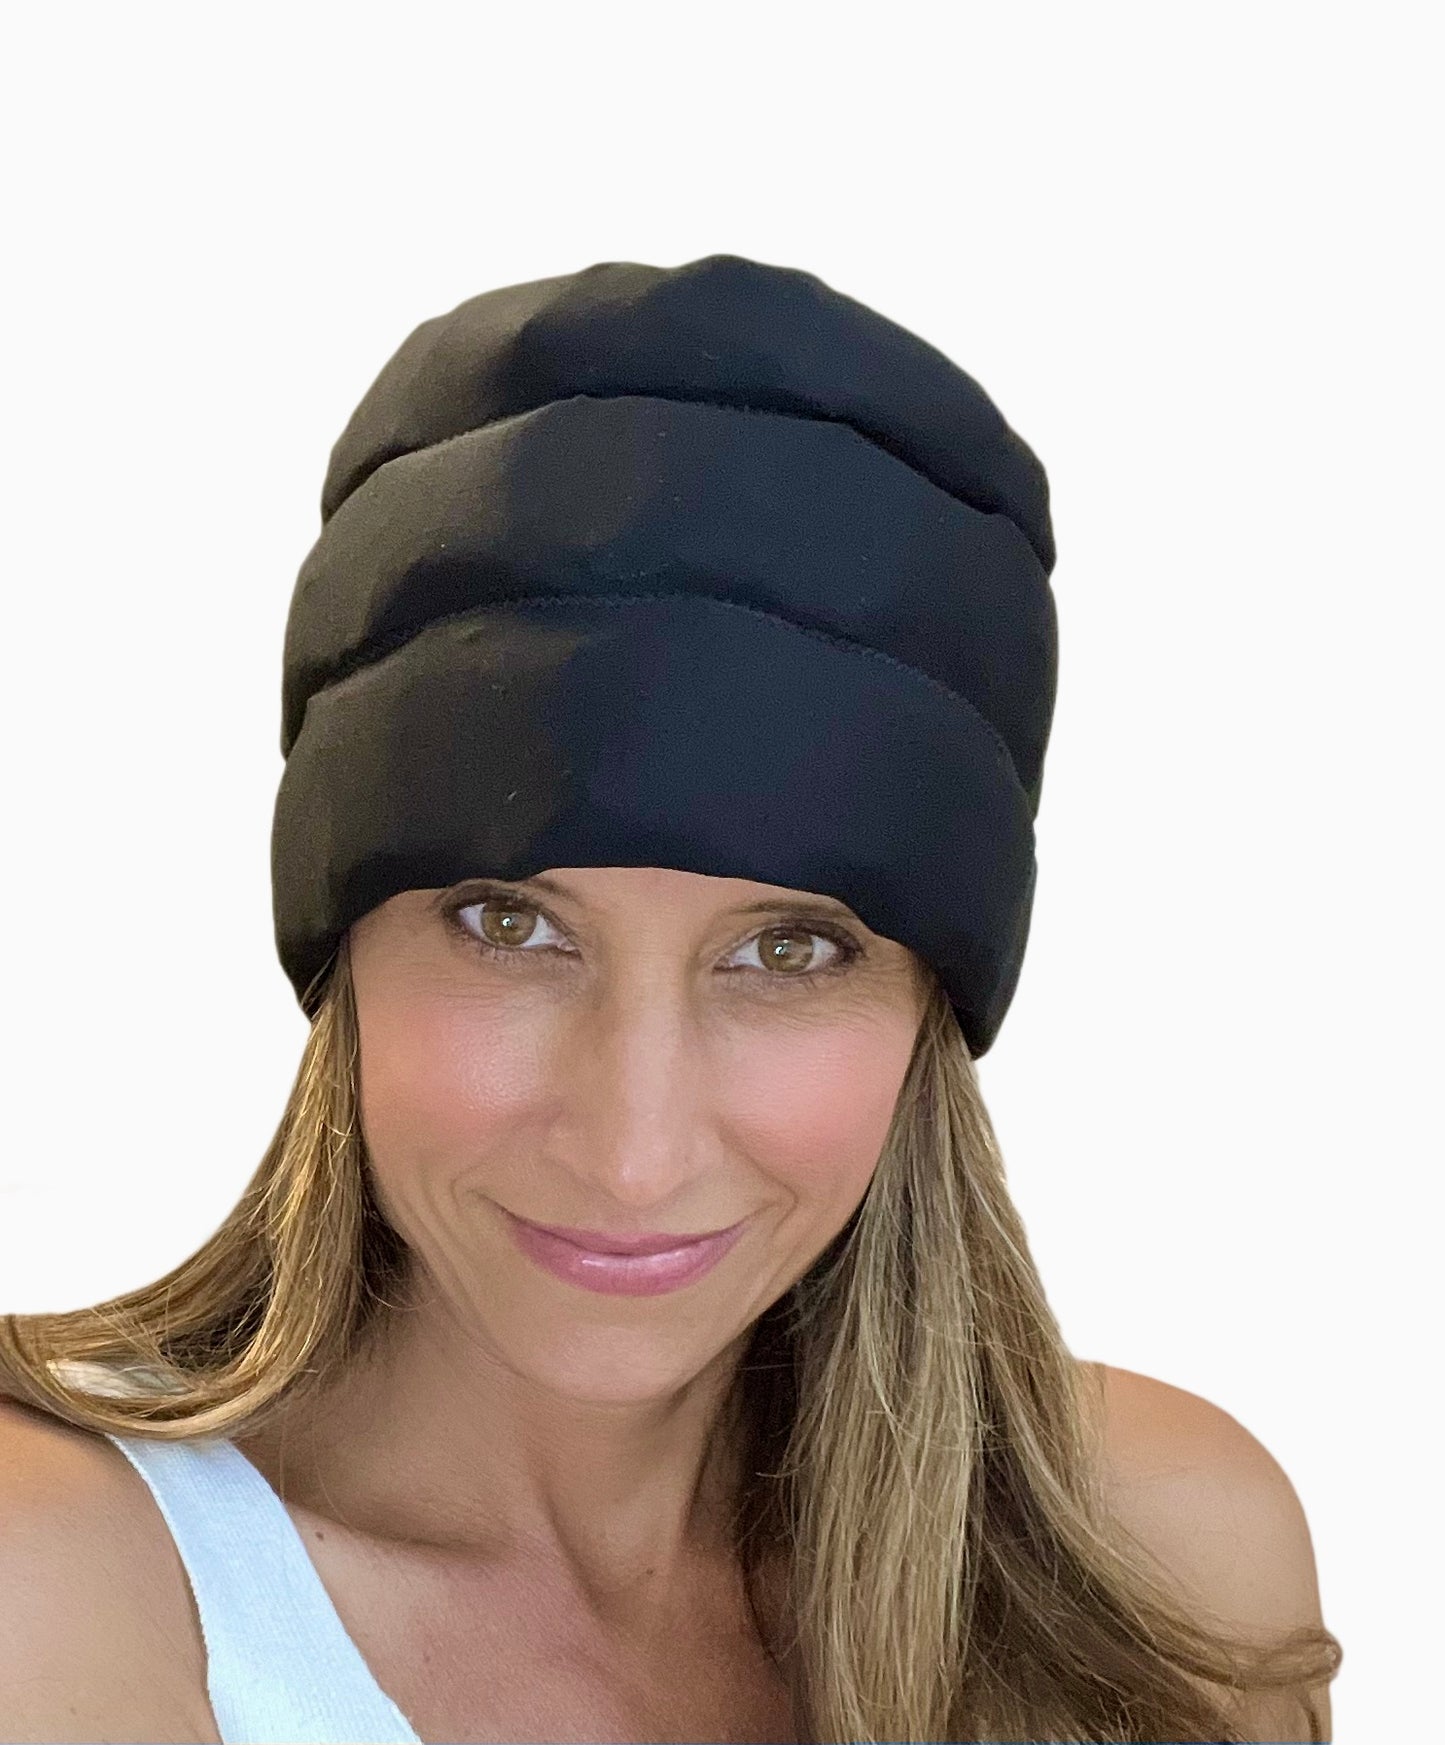 Headache Hat™ Original Style Wearable Ice Pack